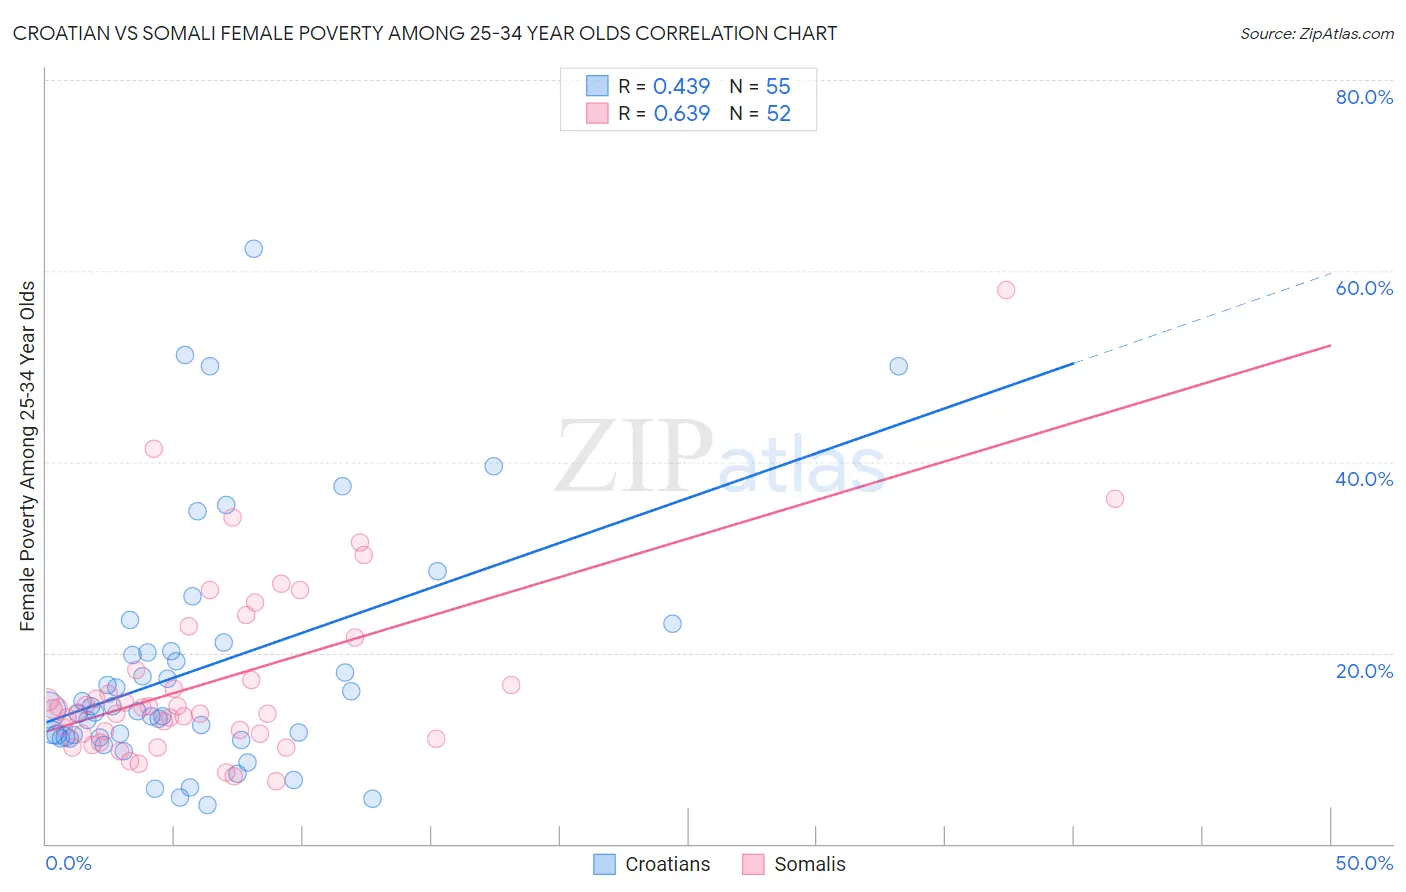 Croatian vs Somali Female Poverty Among 25-34 Year Olds